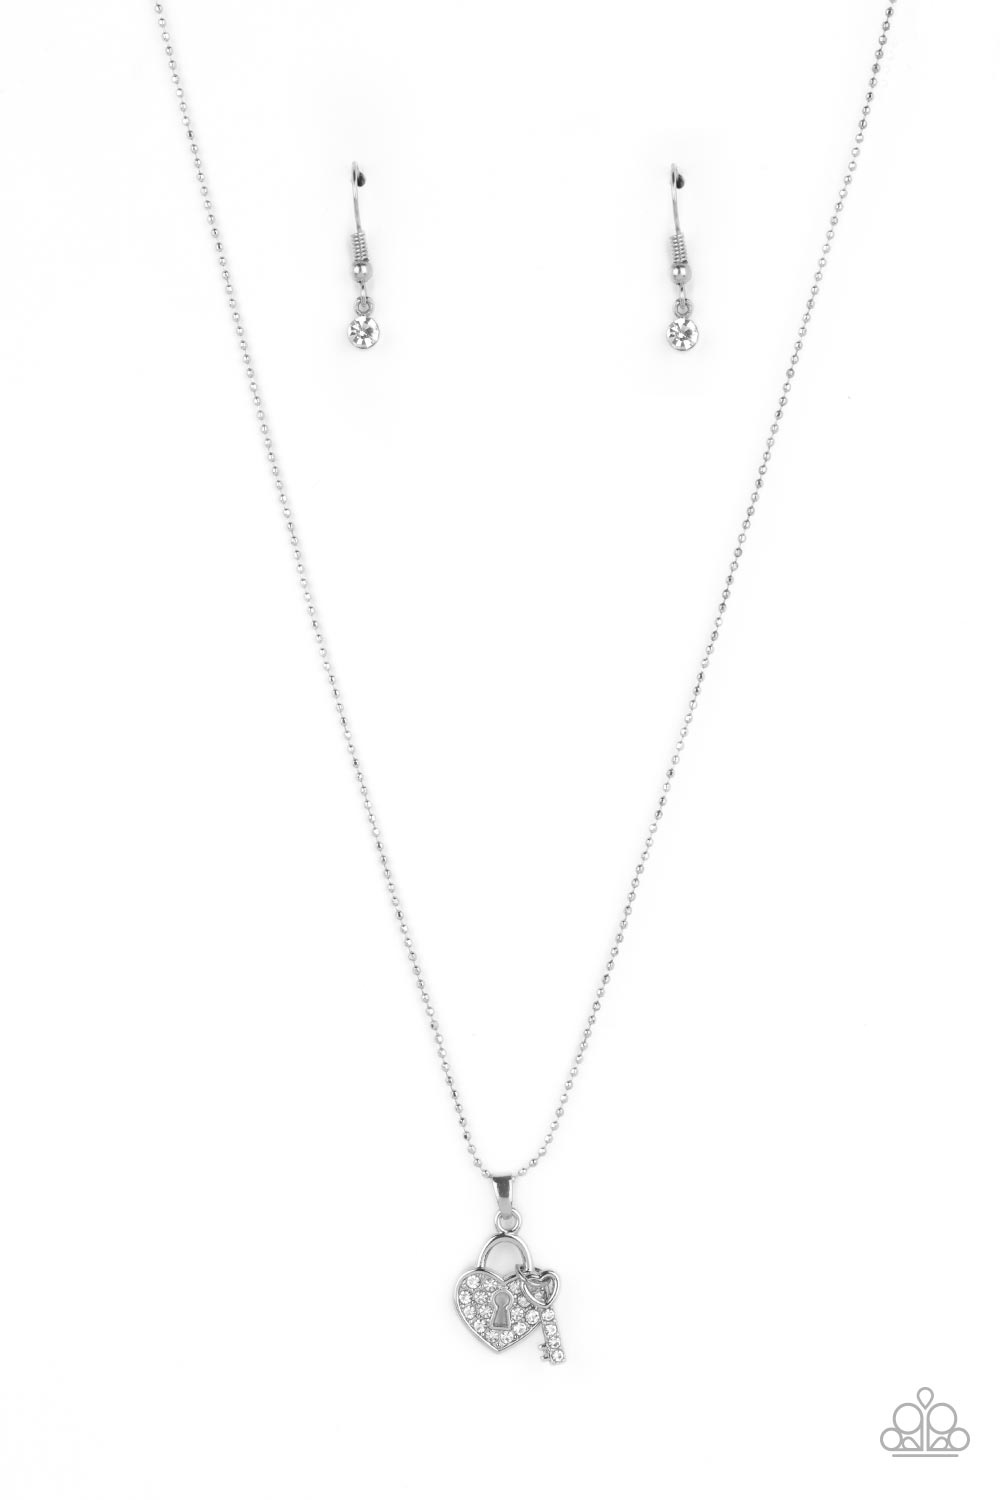 You Hold My Heart White Rhinestone Lock & Key Necklace - Paparazzi Accessories- lightbox - CarasShop.com - $5 Jewelry by Cara Jewels